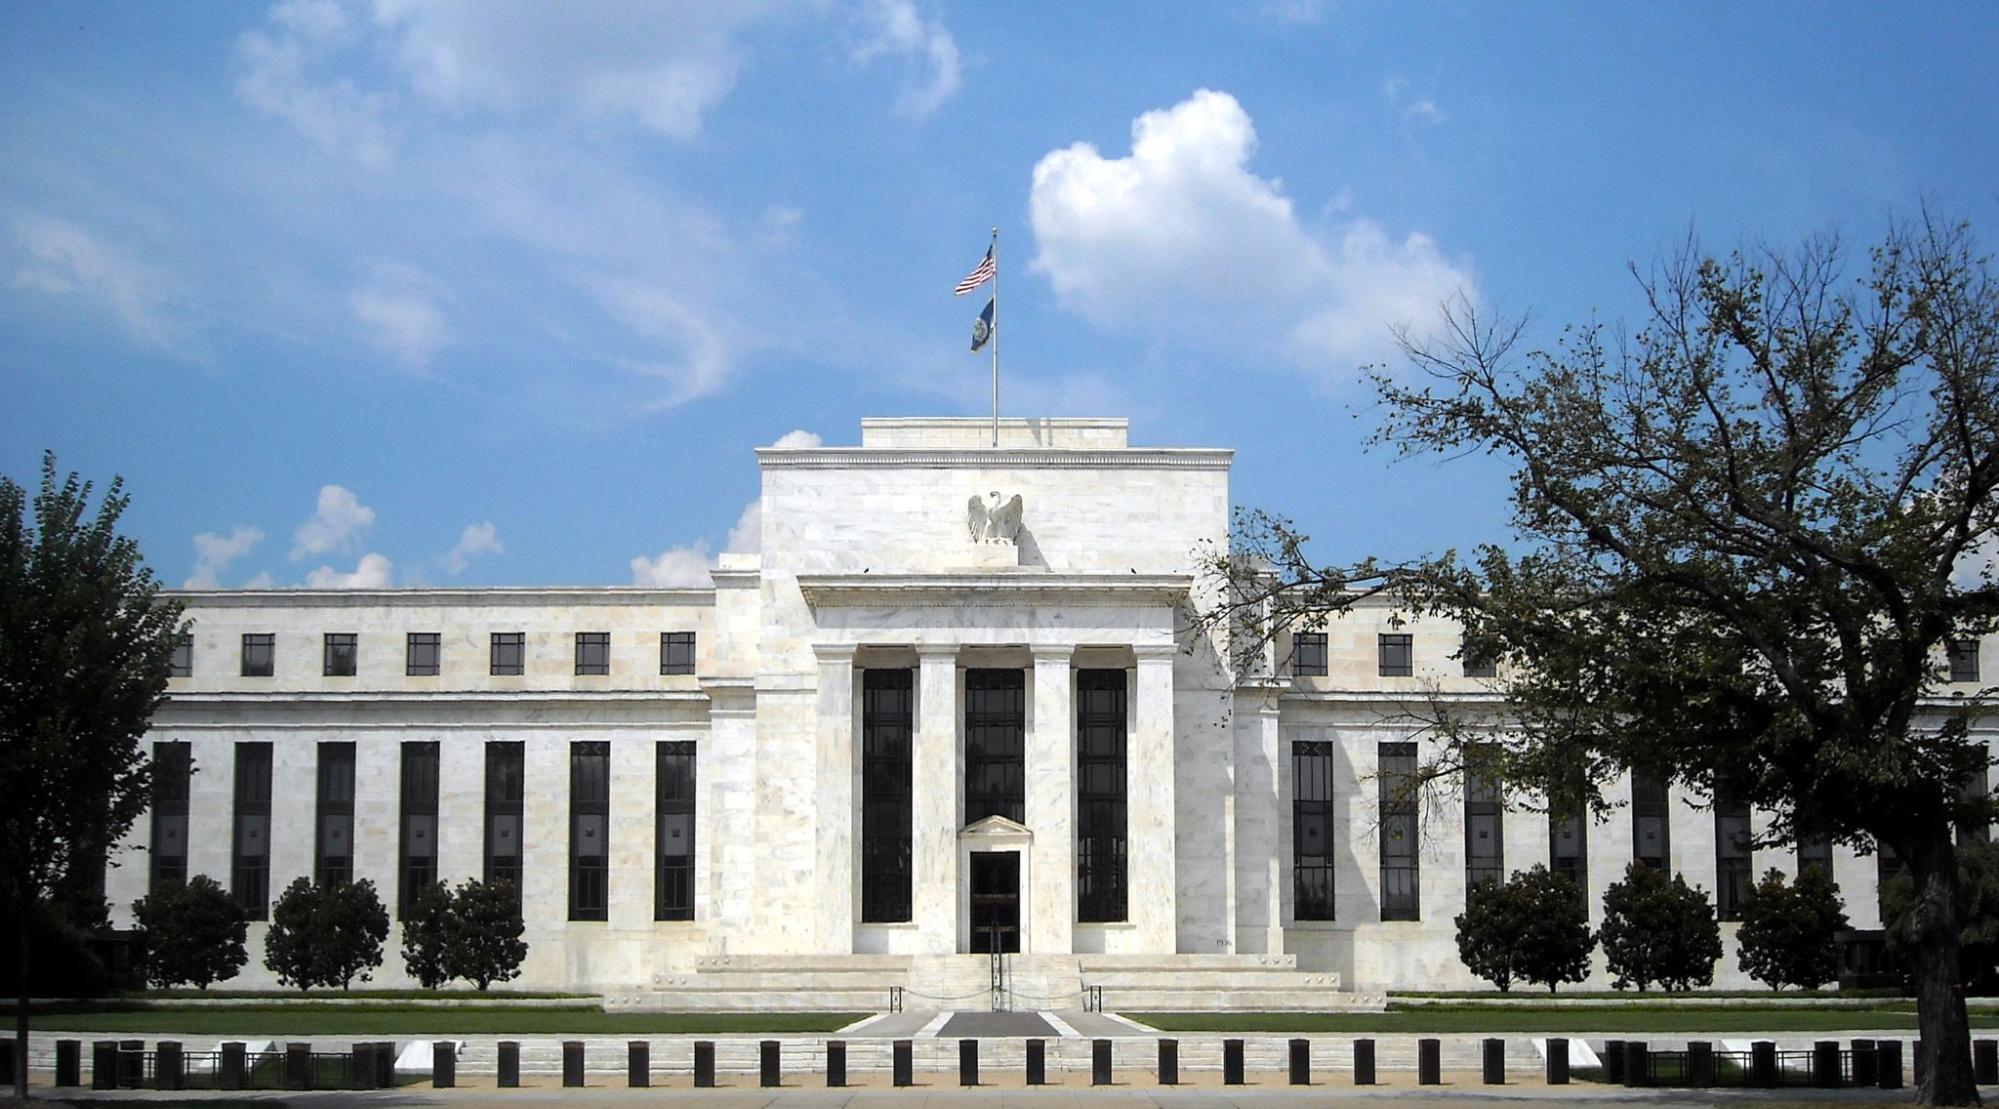 Federal Reserve Board Building, Washington, DC